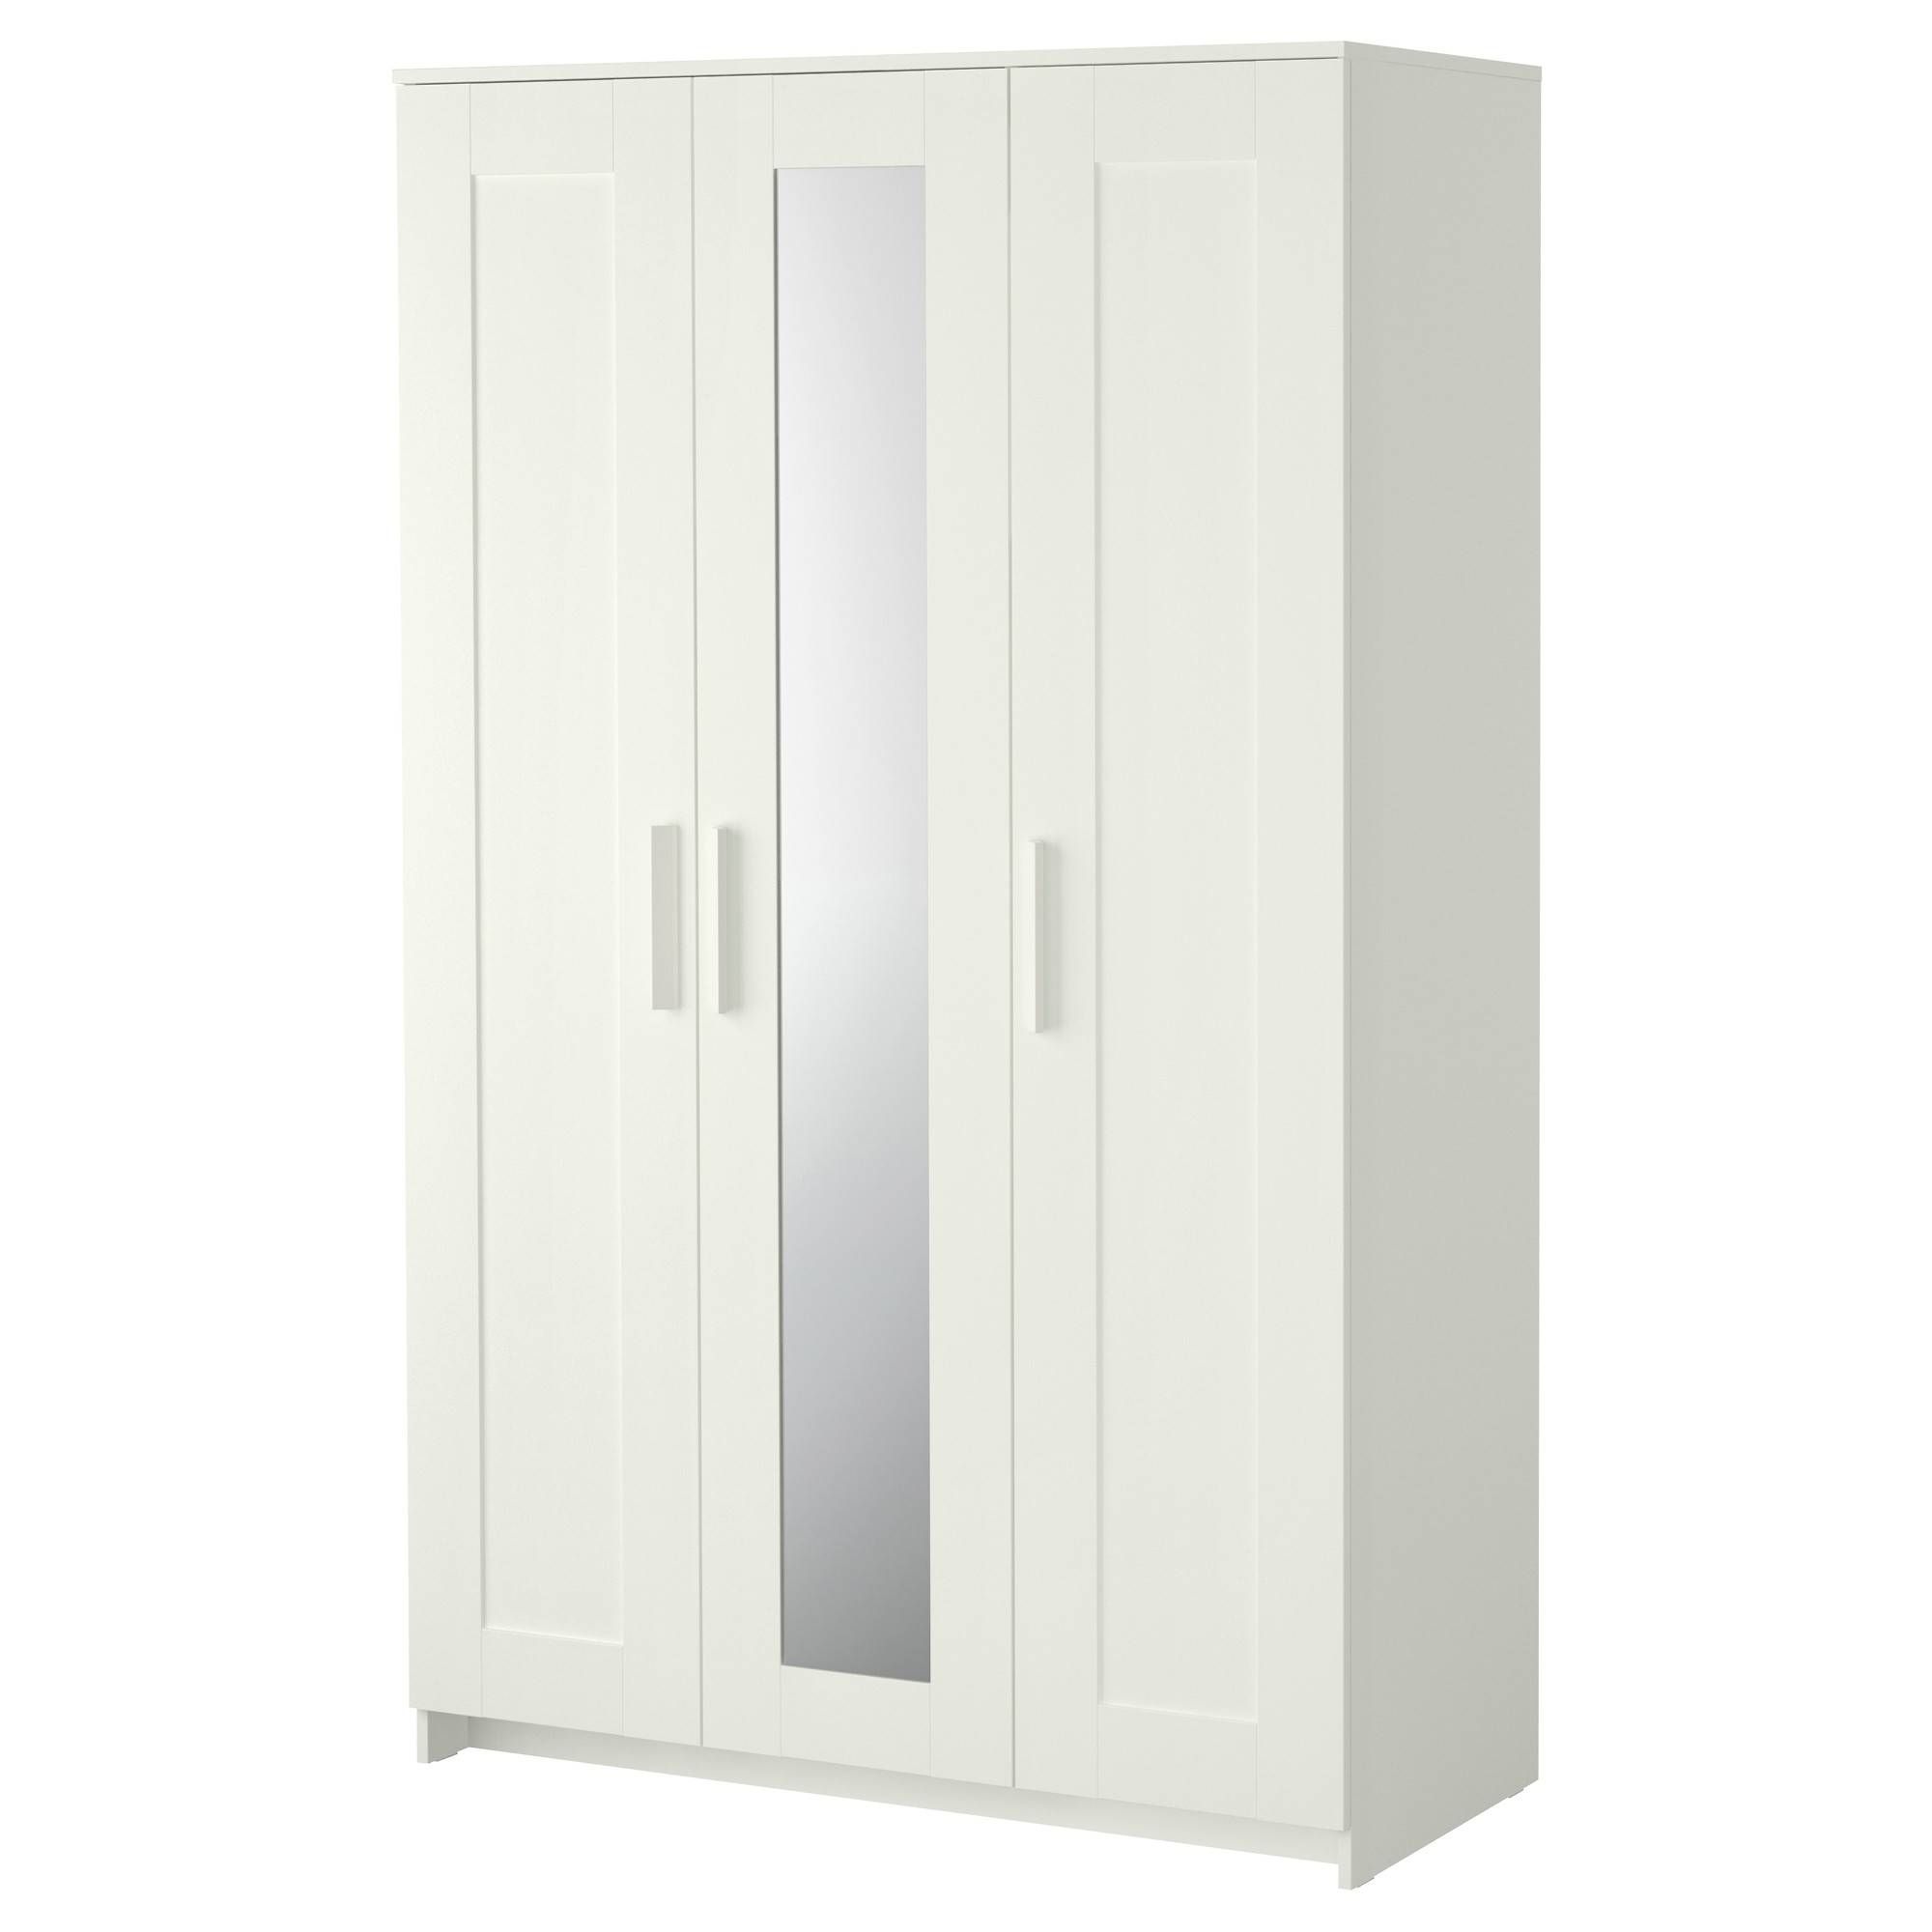 Brimnes Wardrobe With 3 Doors – White – Ikea Intended For 3 Door Wardrobes (View 14 of 15)